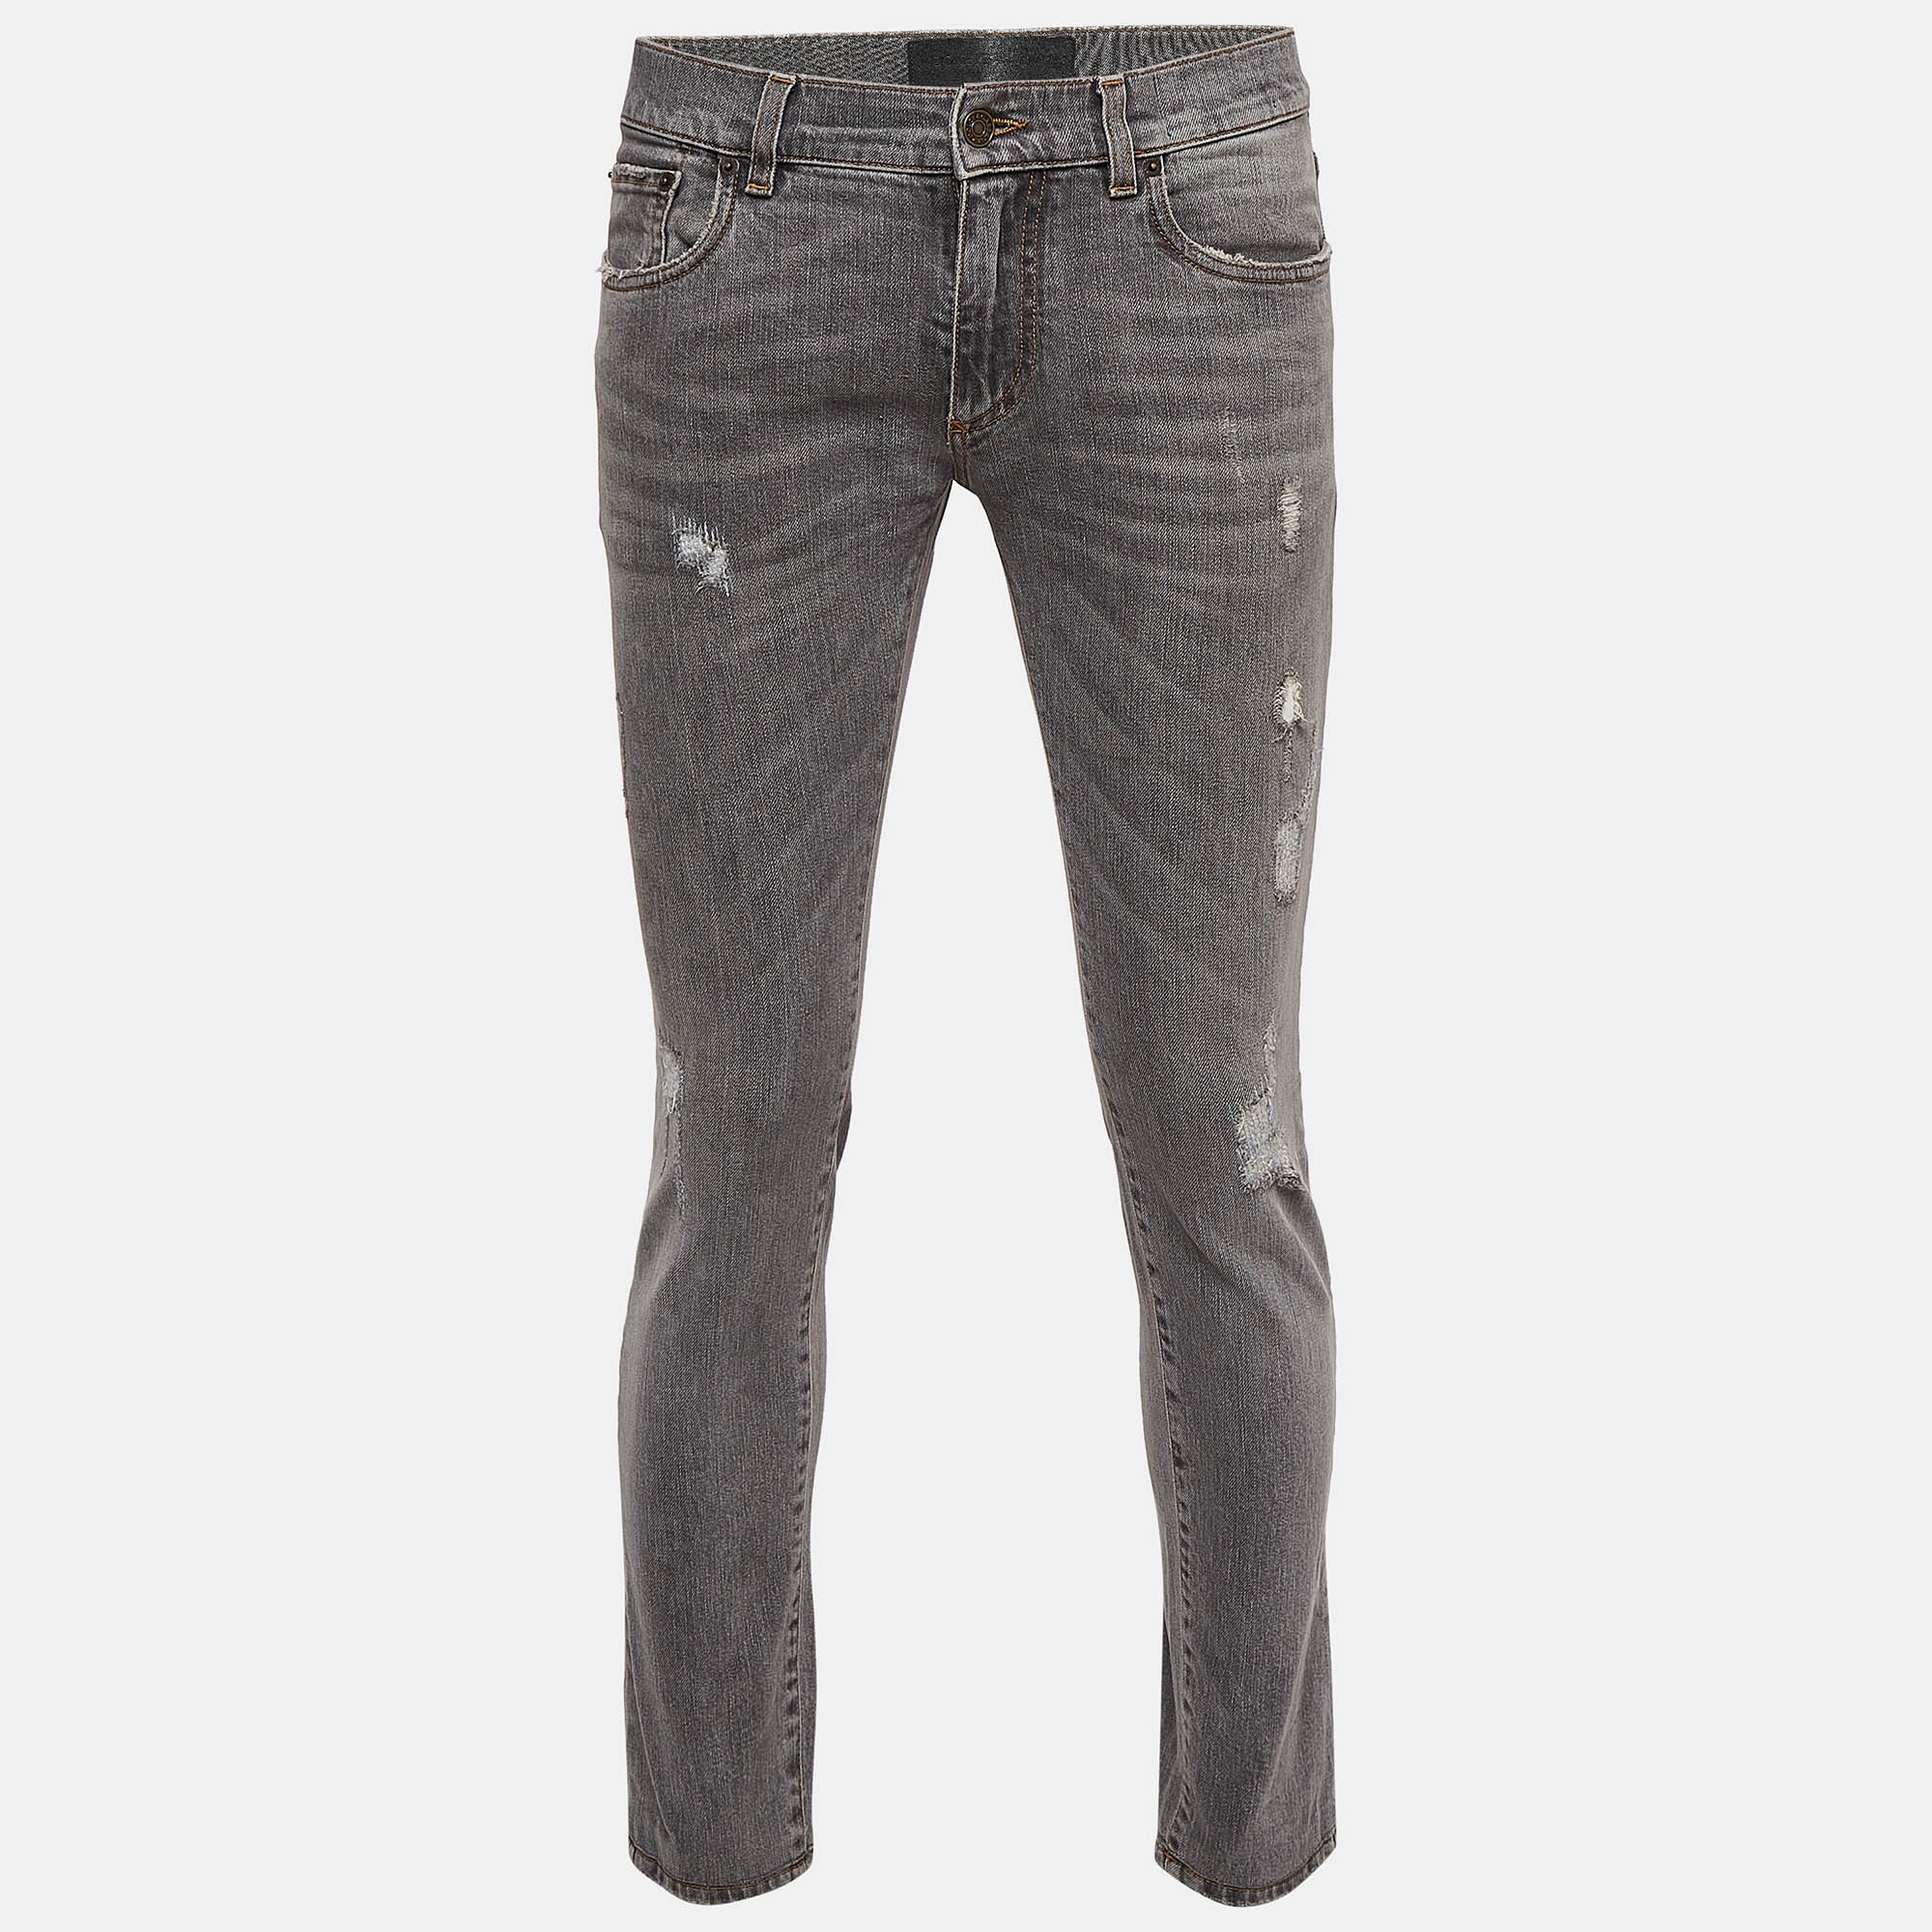 

Dolce & Gabbana Grey Distressed Denim Jeans M Waist 30"